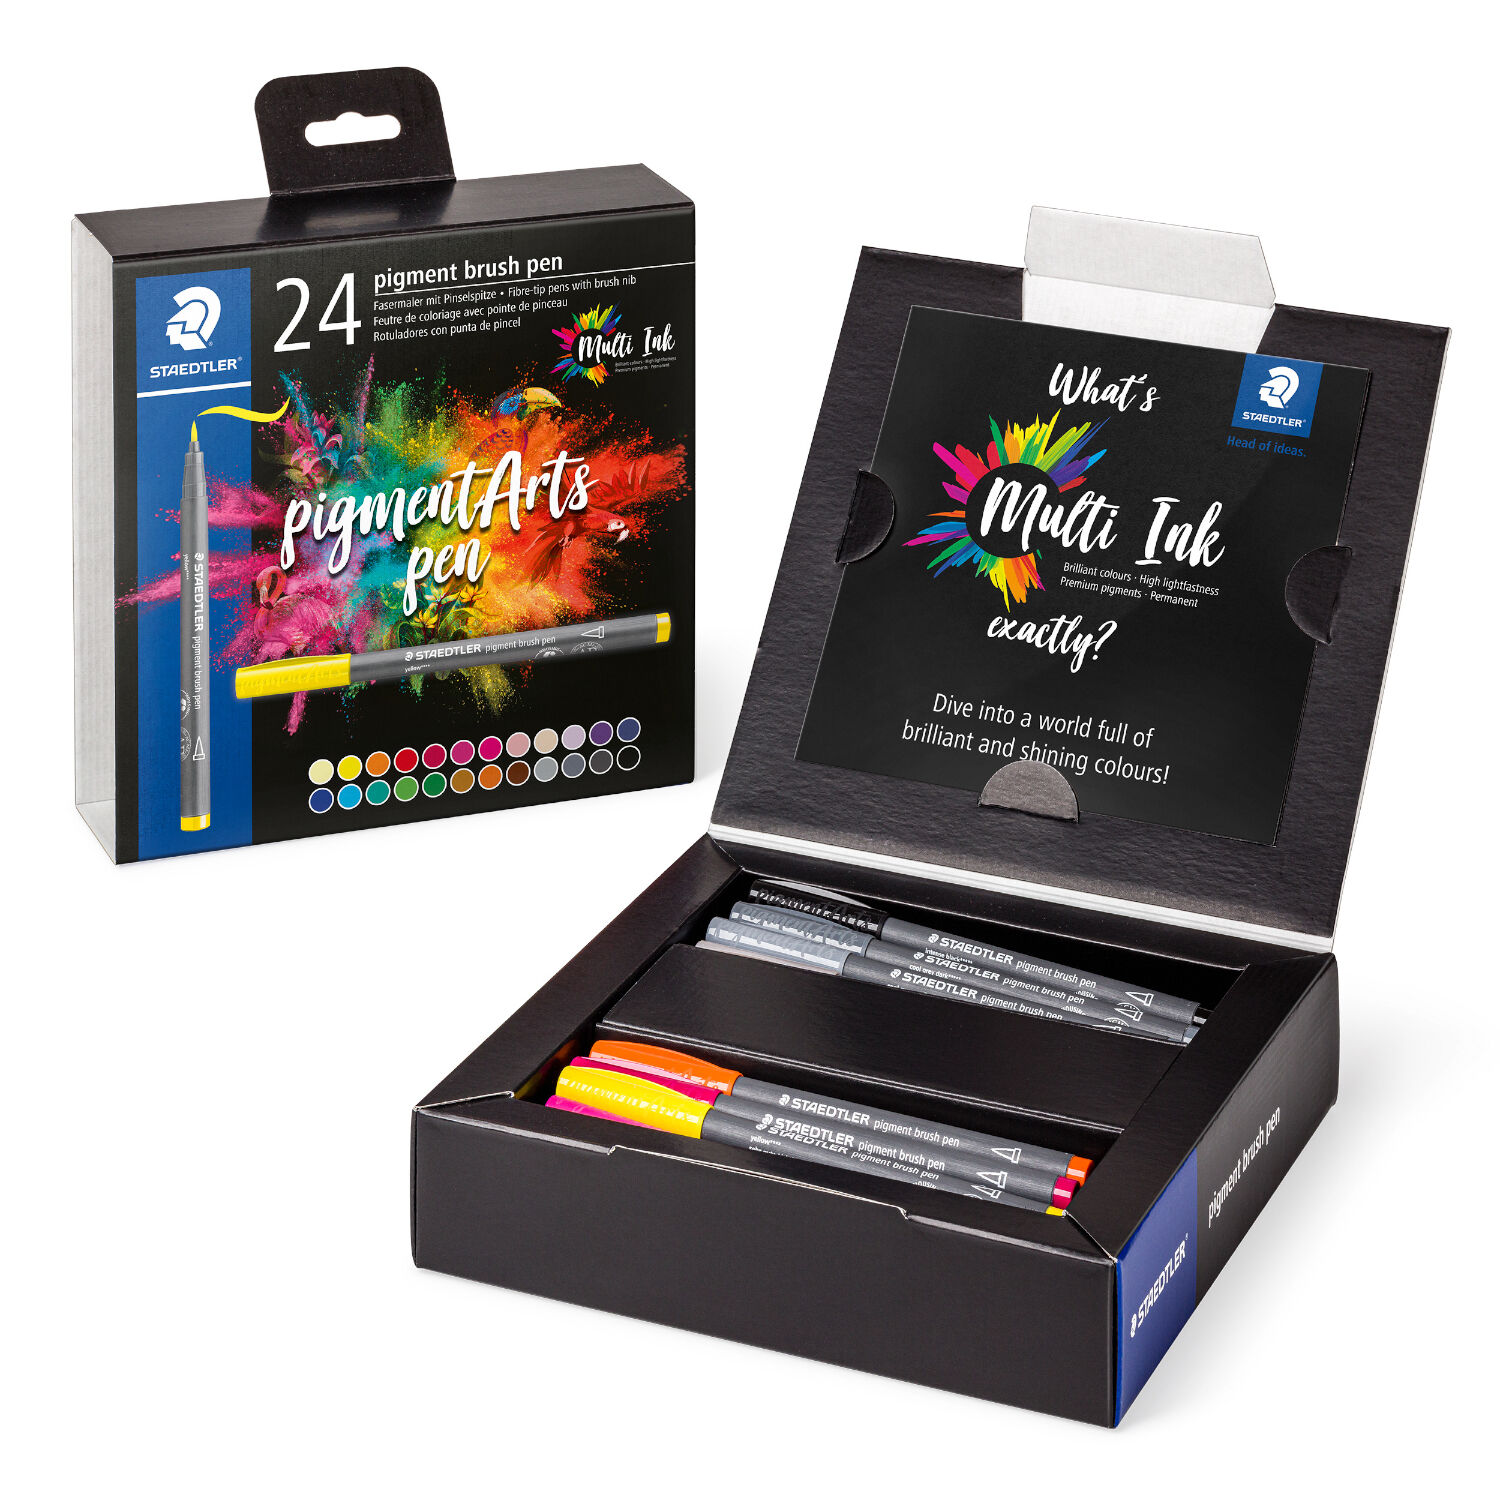 NEU Staedtler Pigment Brush Pen Set, 24 Stifte Bild 2